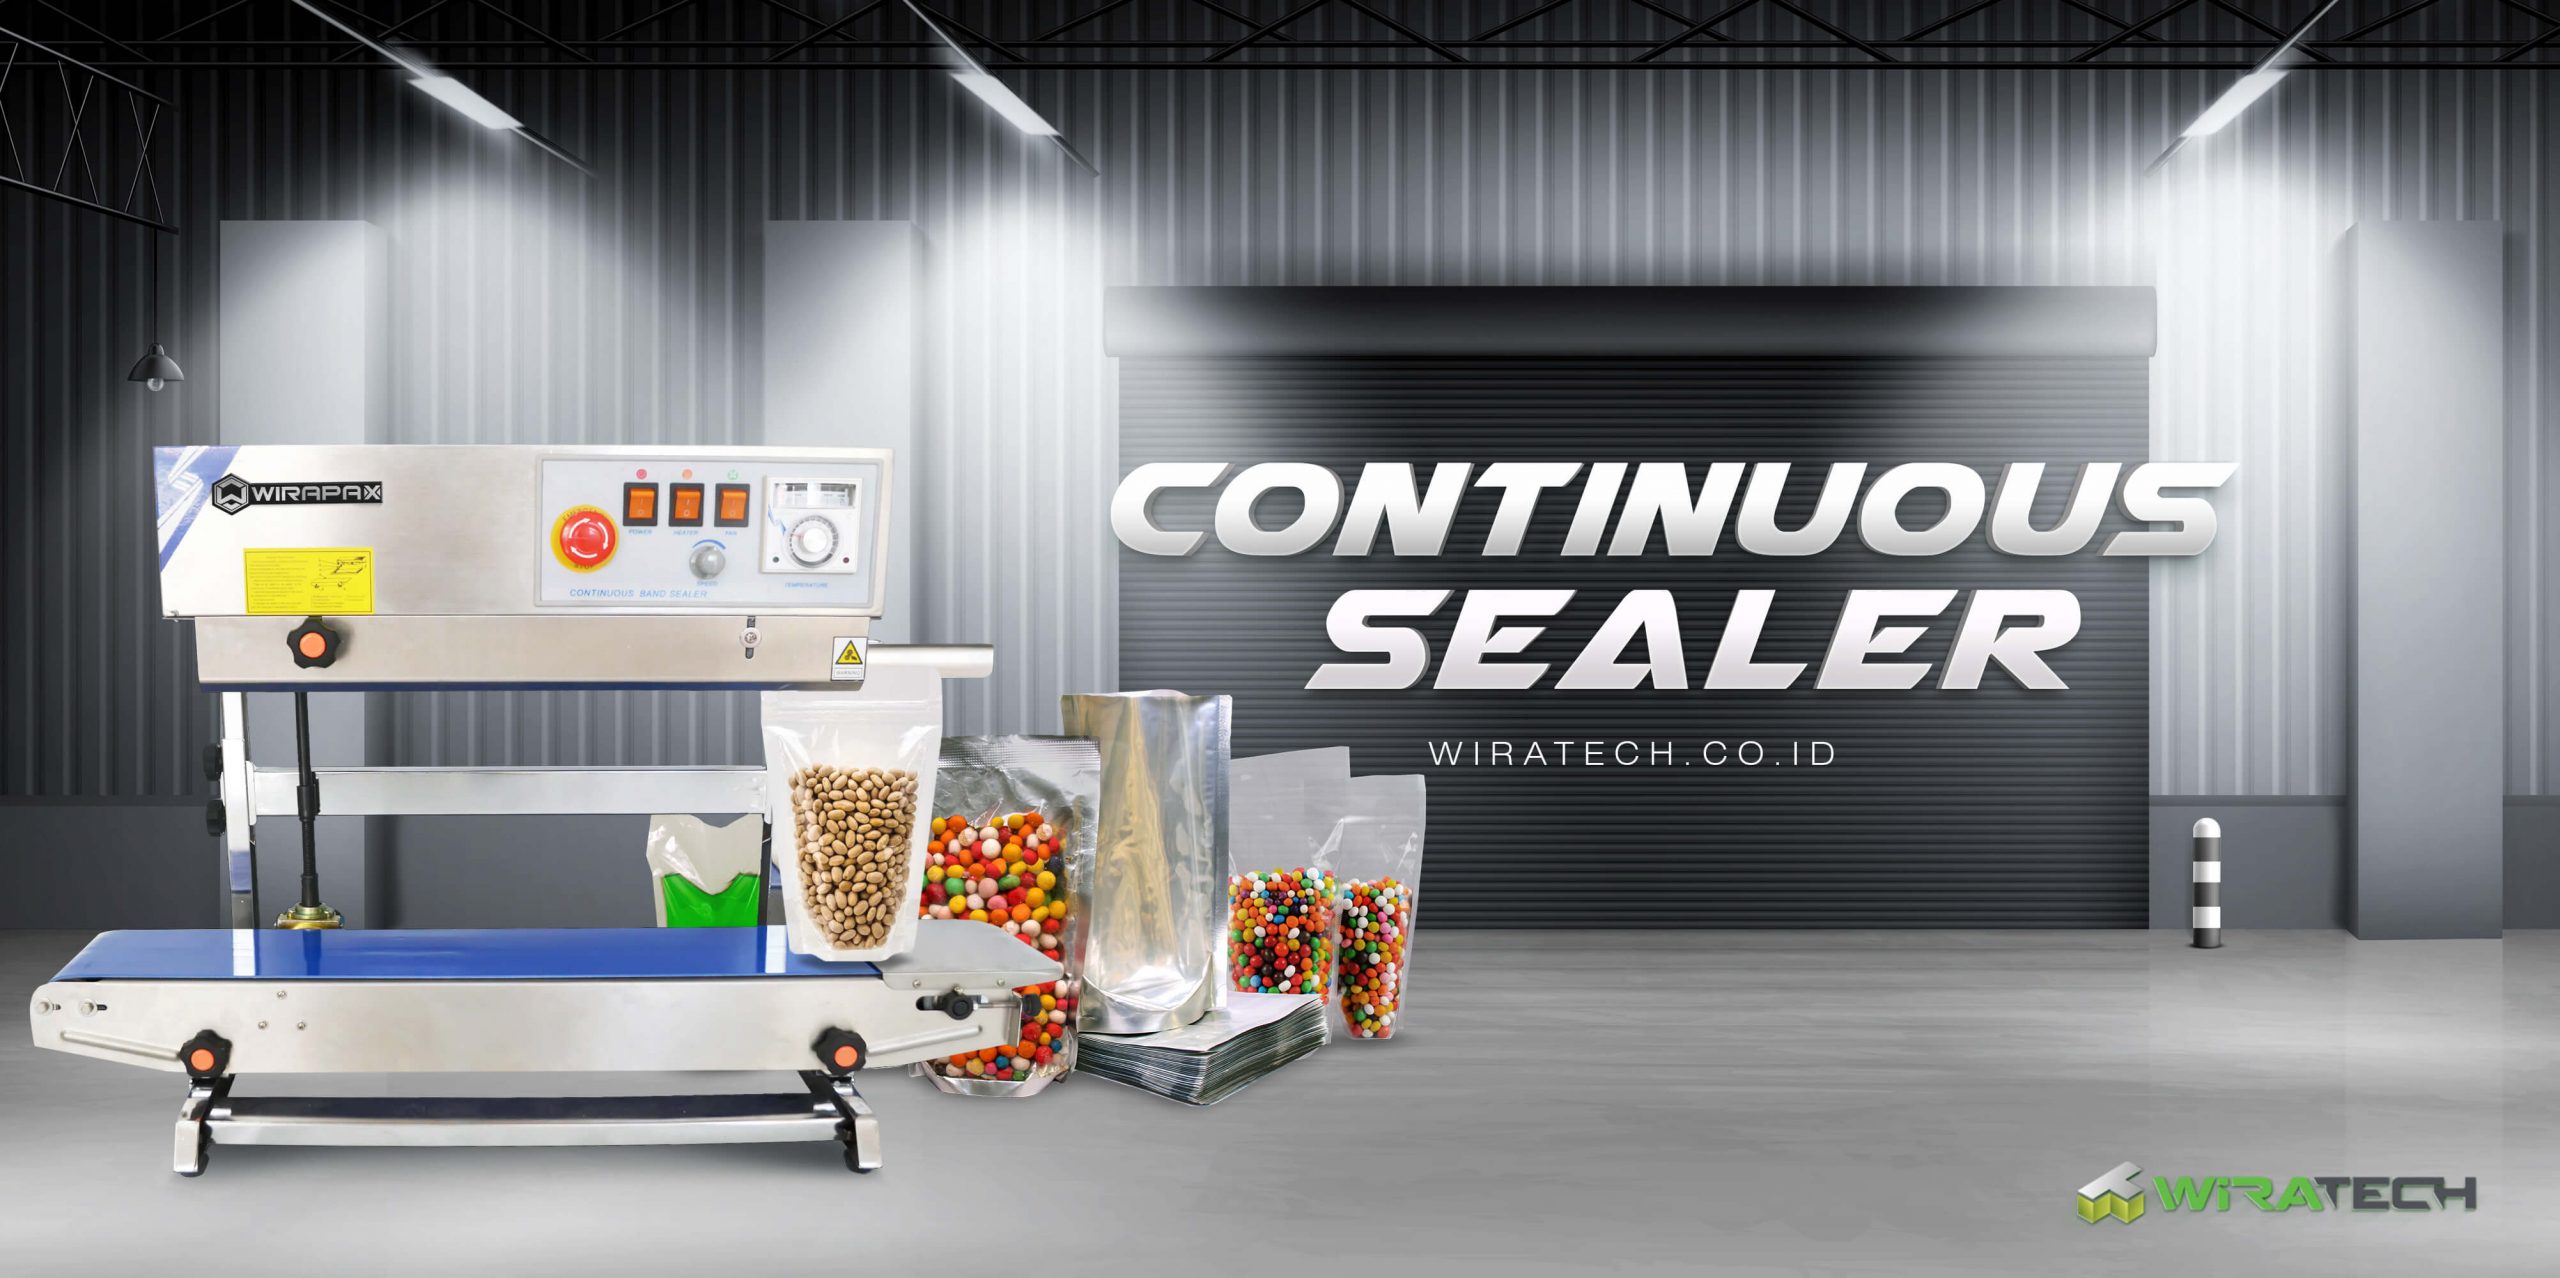 Continuous Sealer - Harga Mesin Continuous Sealer 2020 Terbaru